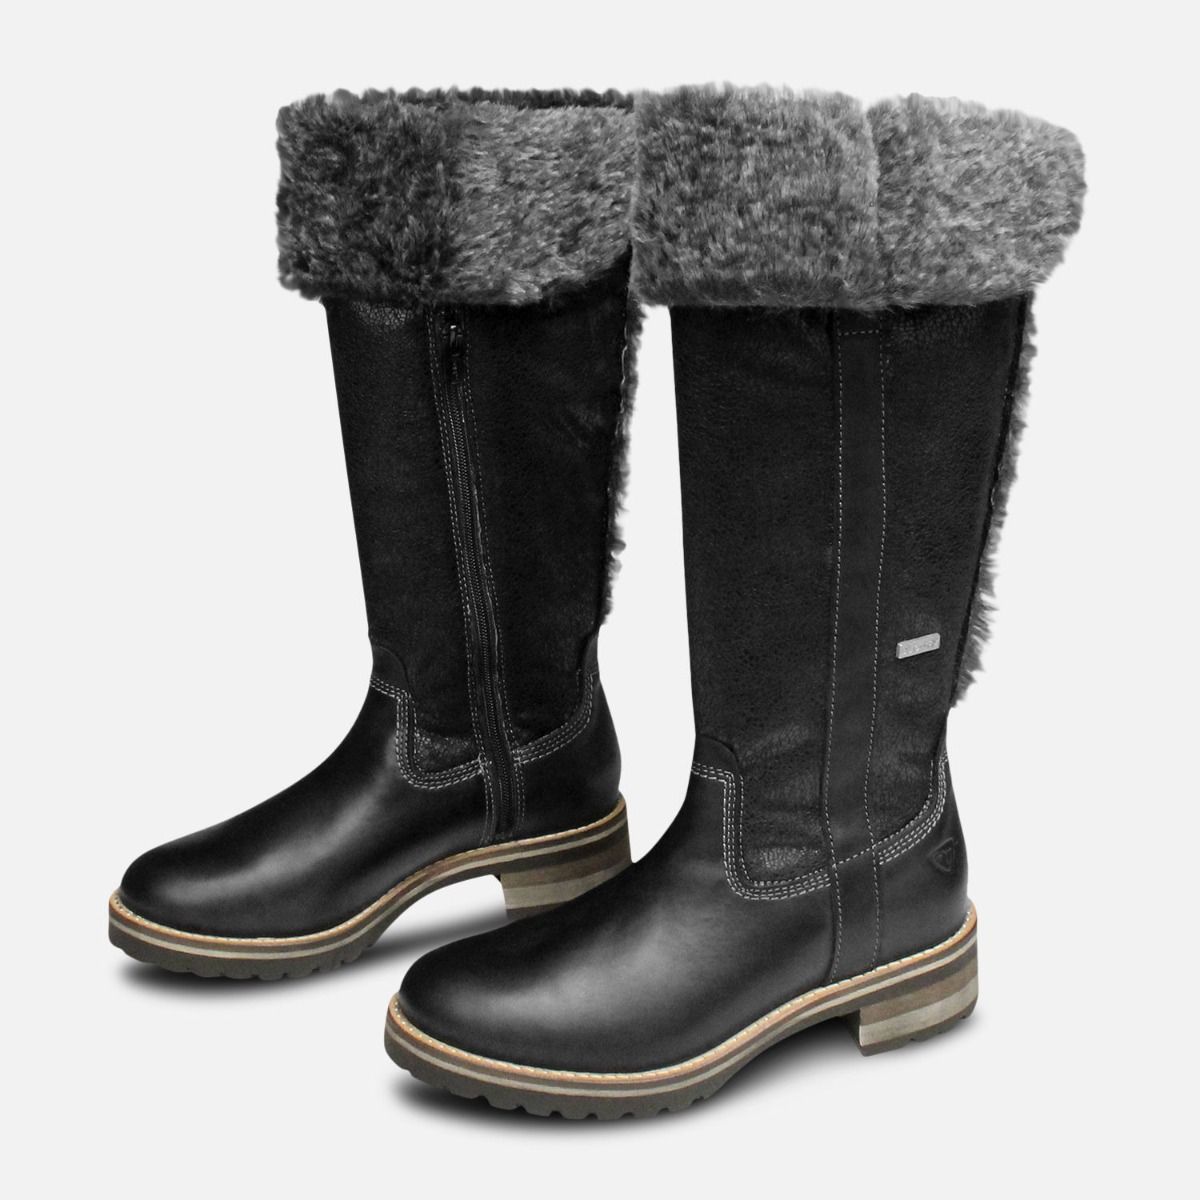 Summen efterligne Ombord Black Warm Fur Lined Tamaris Long Boots with Duo Tex